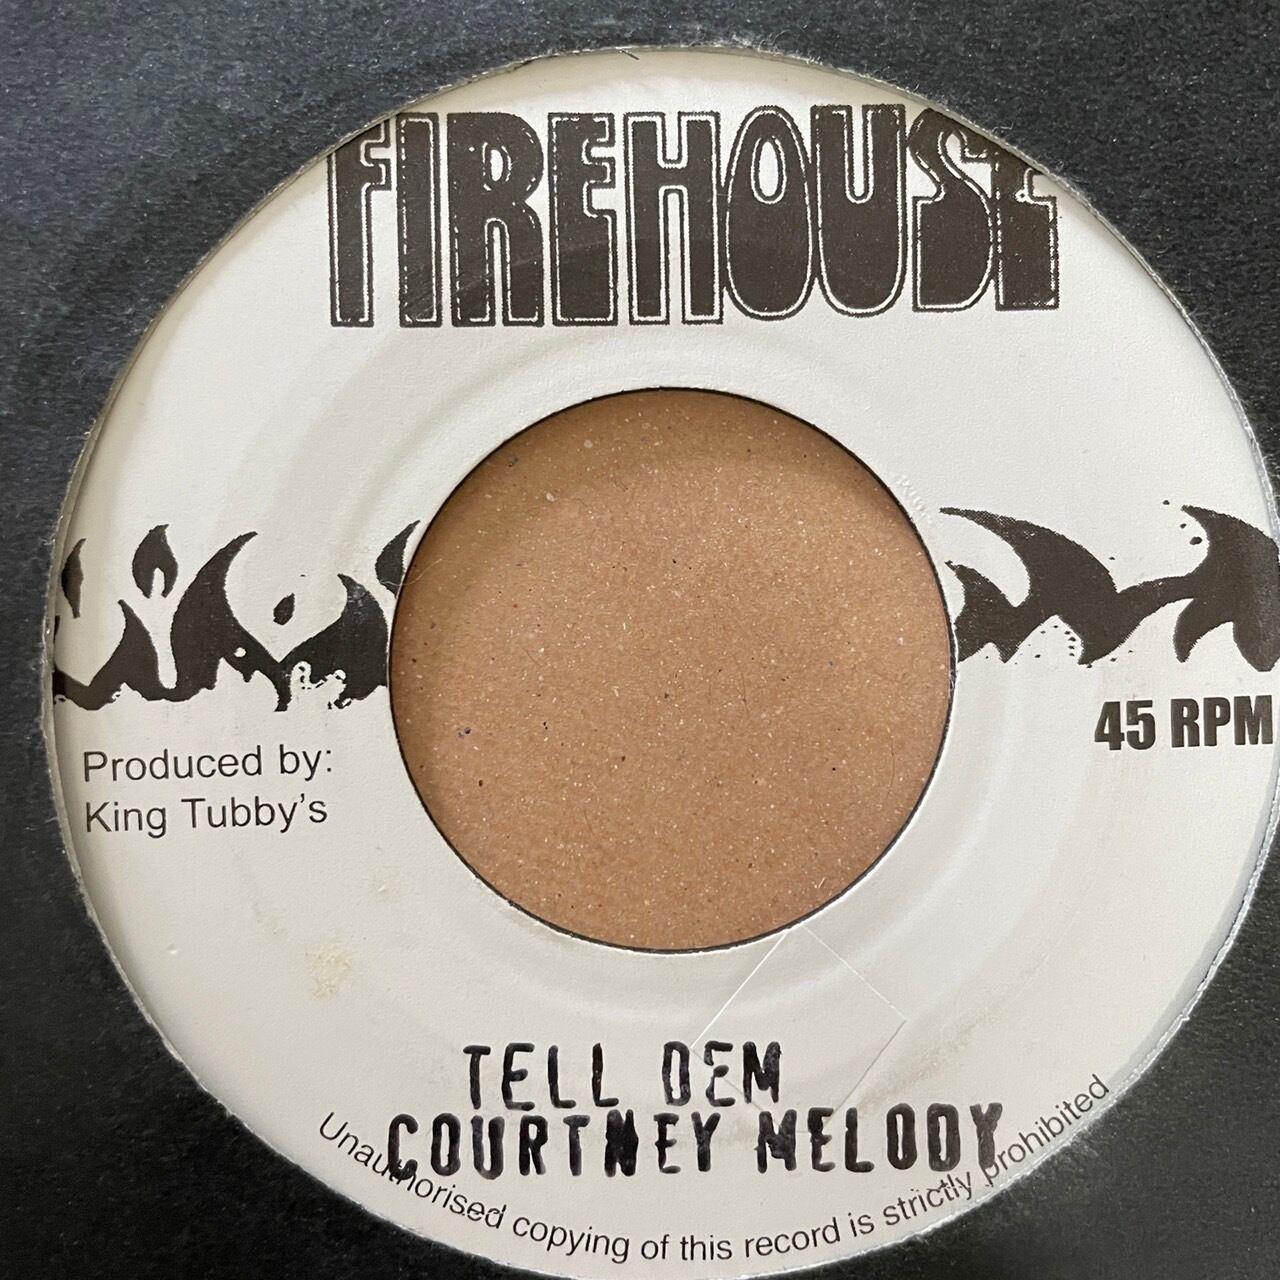 Courtney Melody - Tell Dem【7-21101】